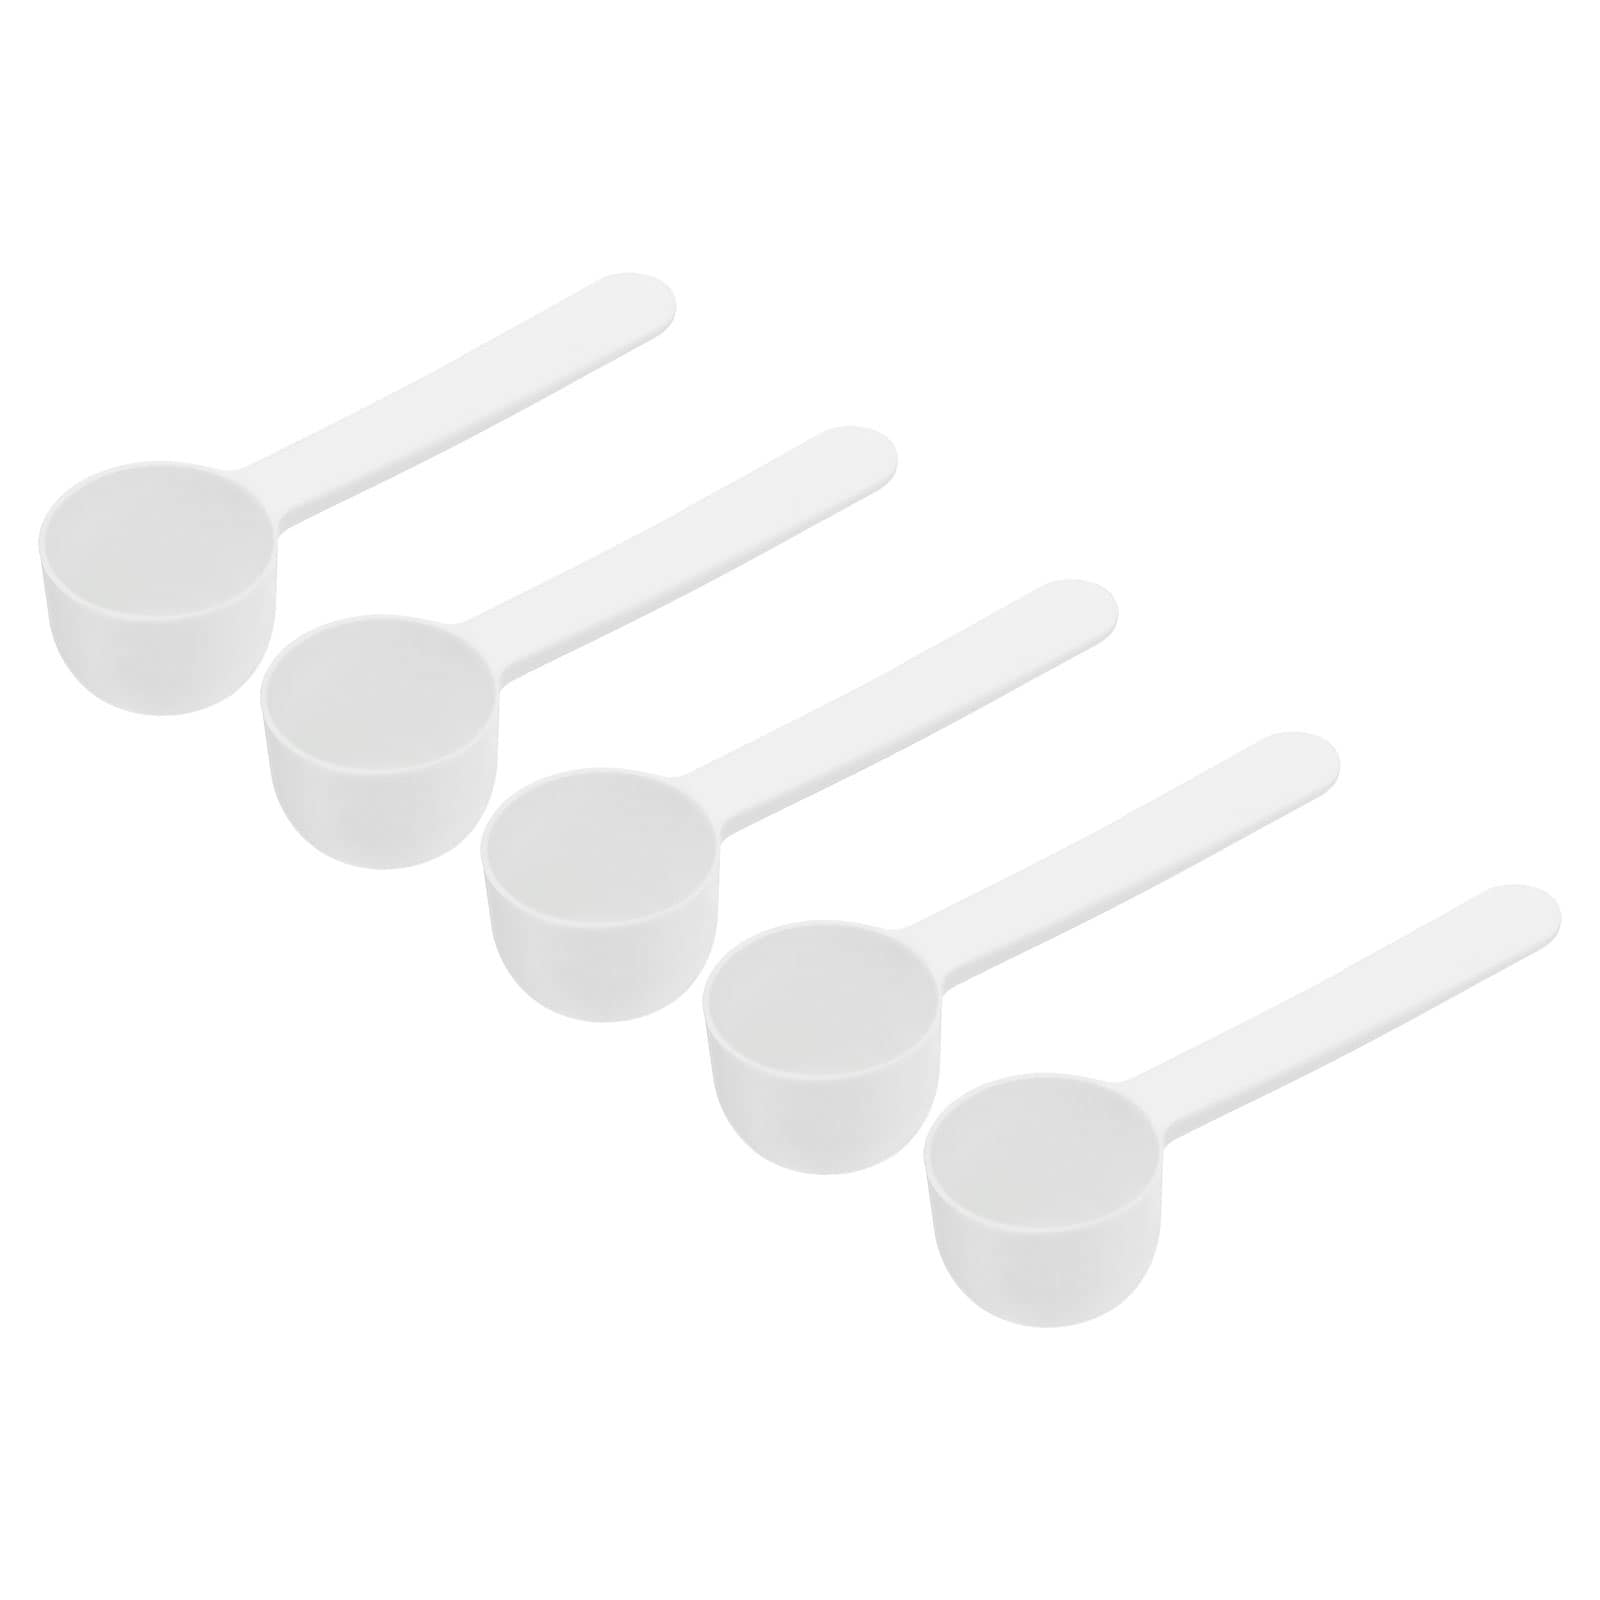 Stainless Steel Measuring Spoons - Flat Bottom (Set of 4), Norpro